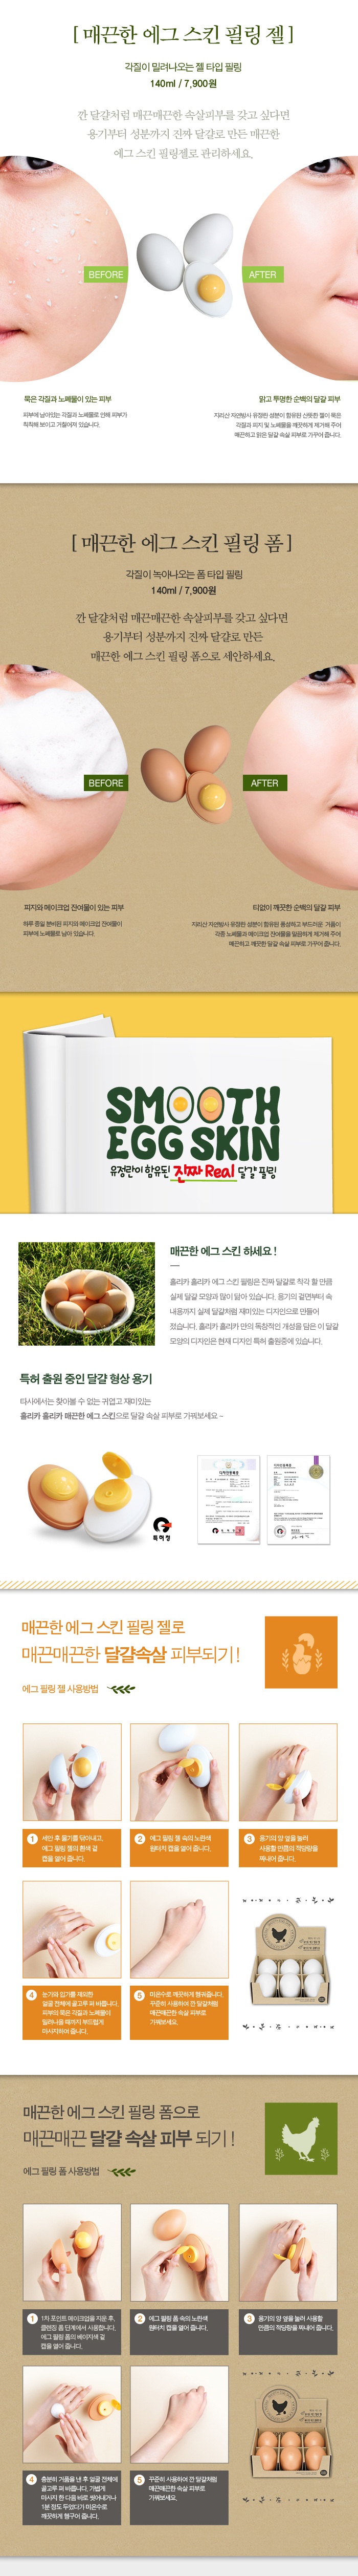 Holika Holika Smooth Egg Skin Peeling Gel korean cosmetic skincare product online shop hong kong germany malaysia4